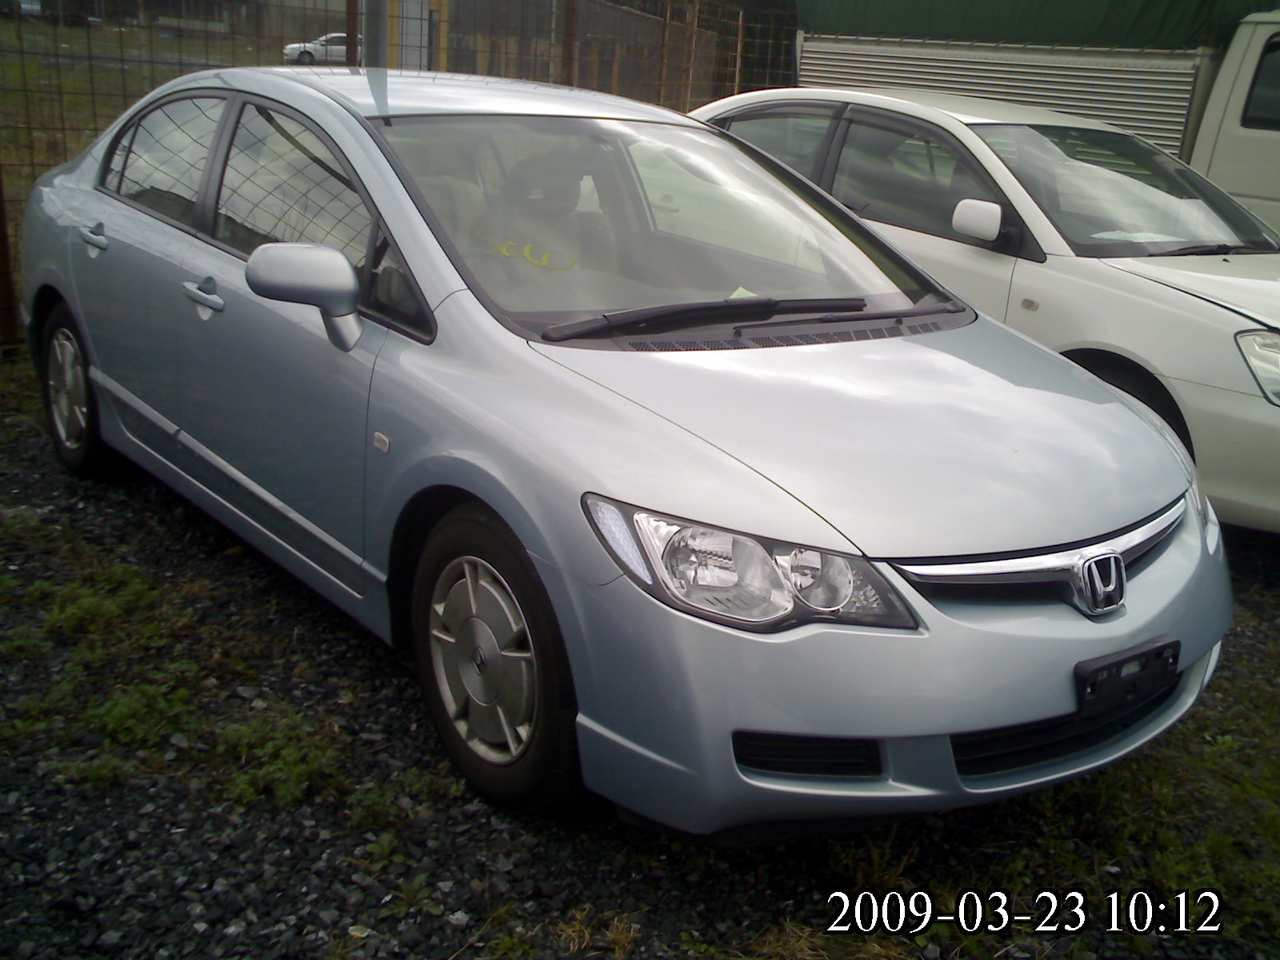 2005 Honda civic hybrid recall #1